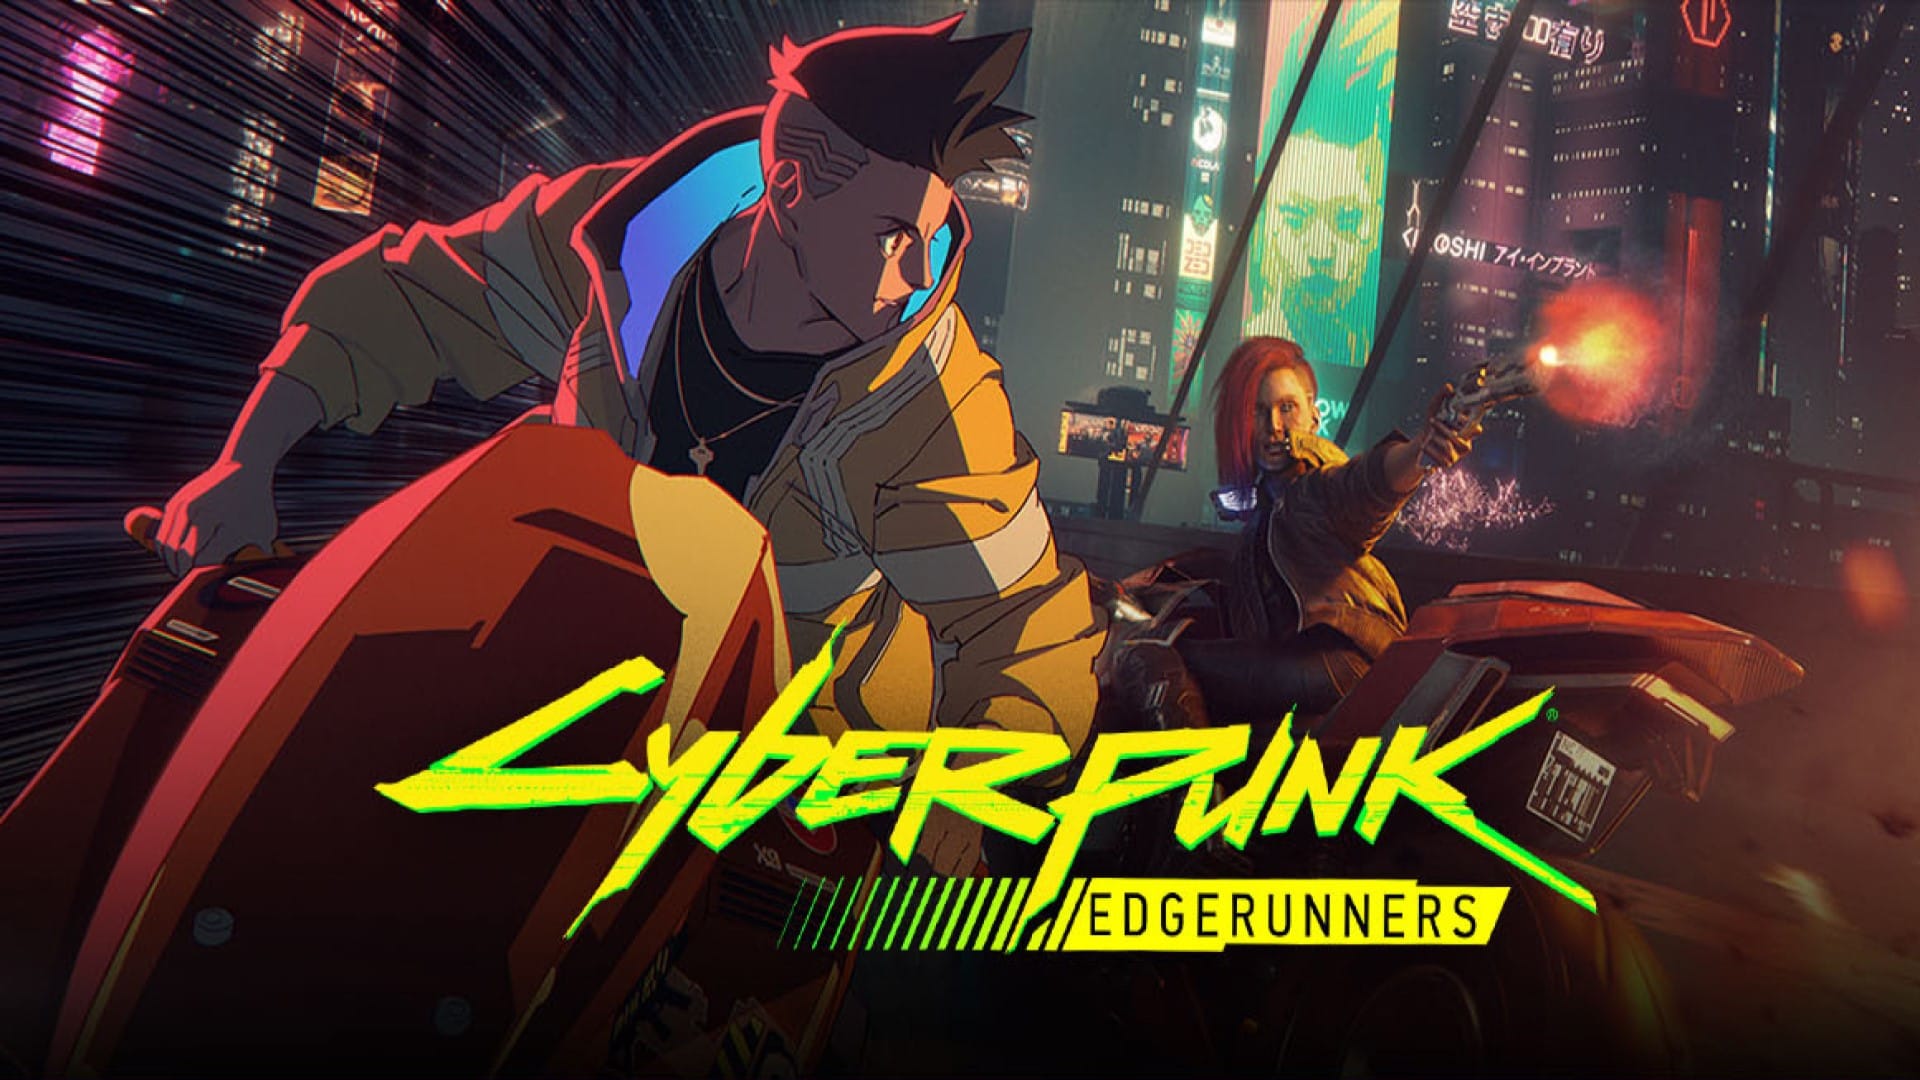 Cyberpunk: Edgerunners Celebrates 1st Anniversary With New Art